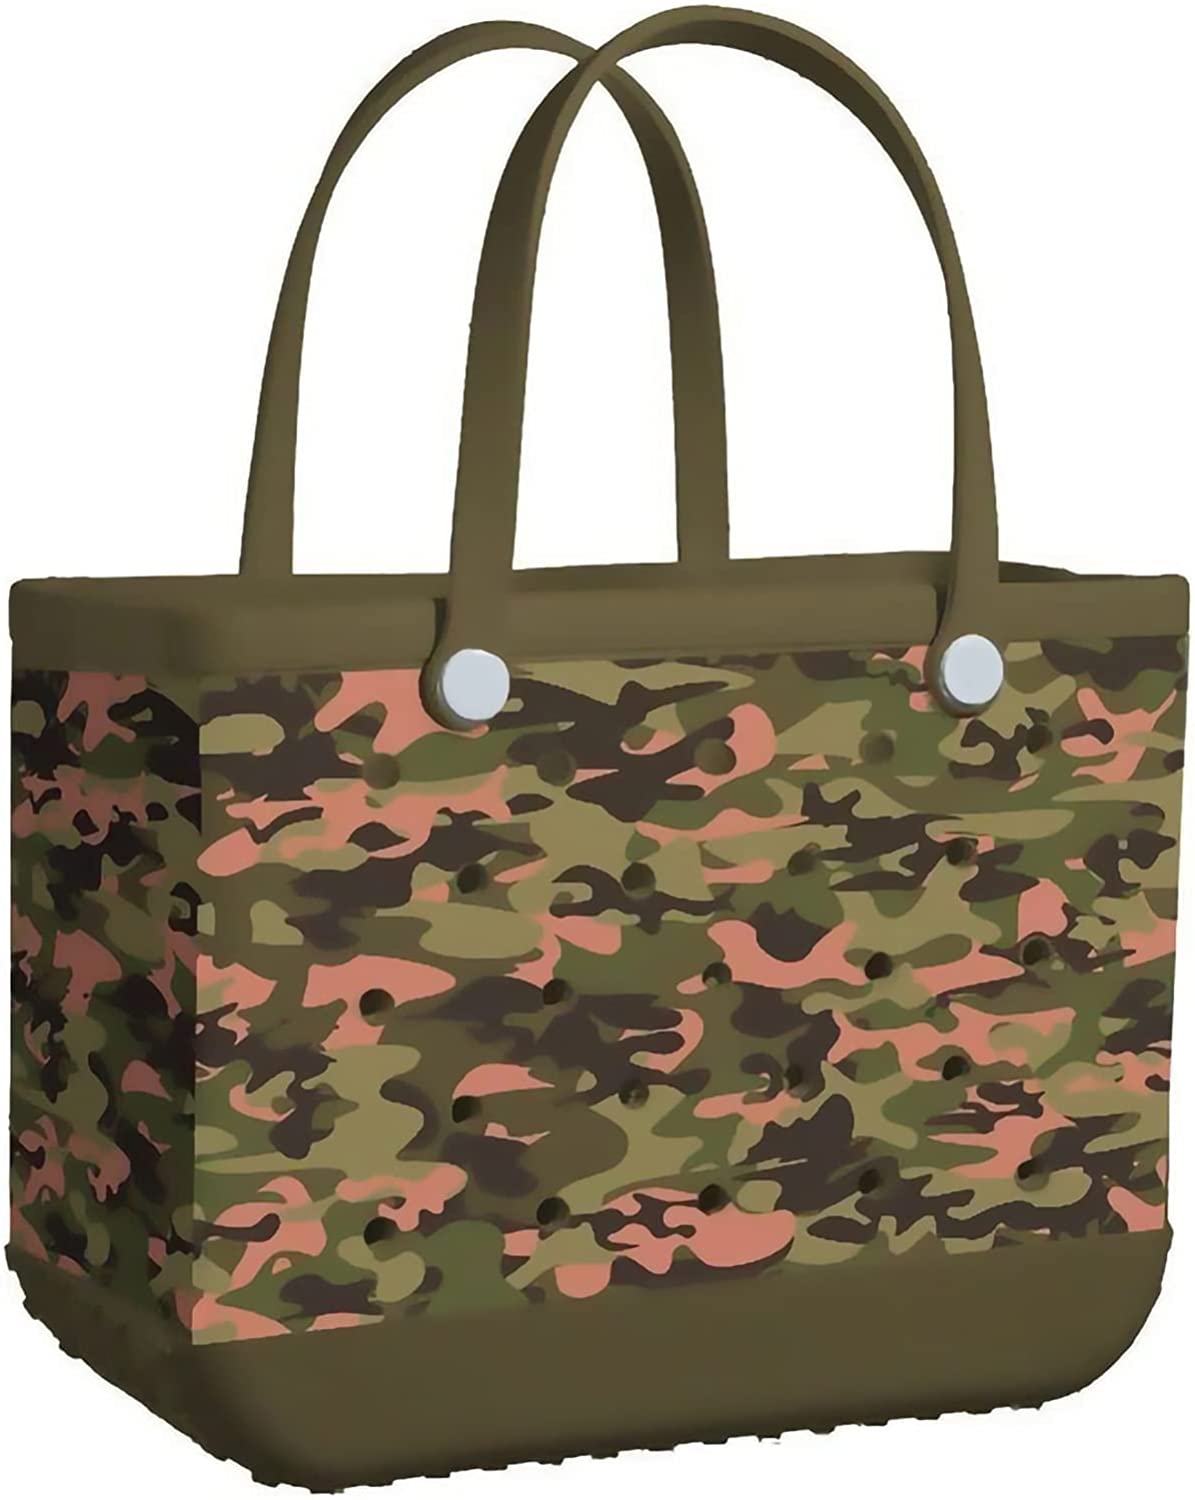 Rubber Beach Bag Waterproof EVA Portable Handbag Travel Bags with Hole